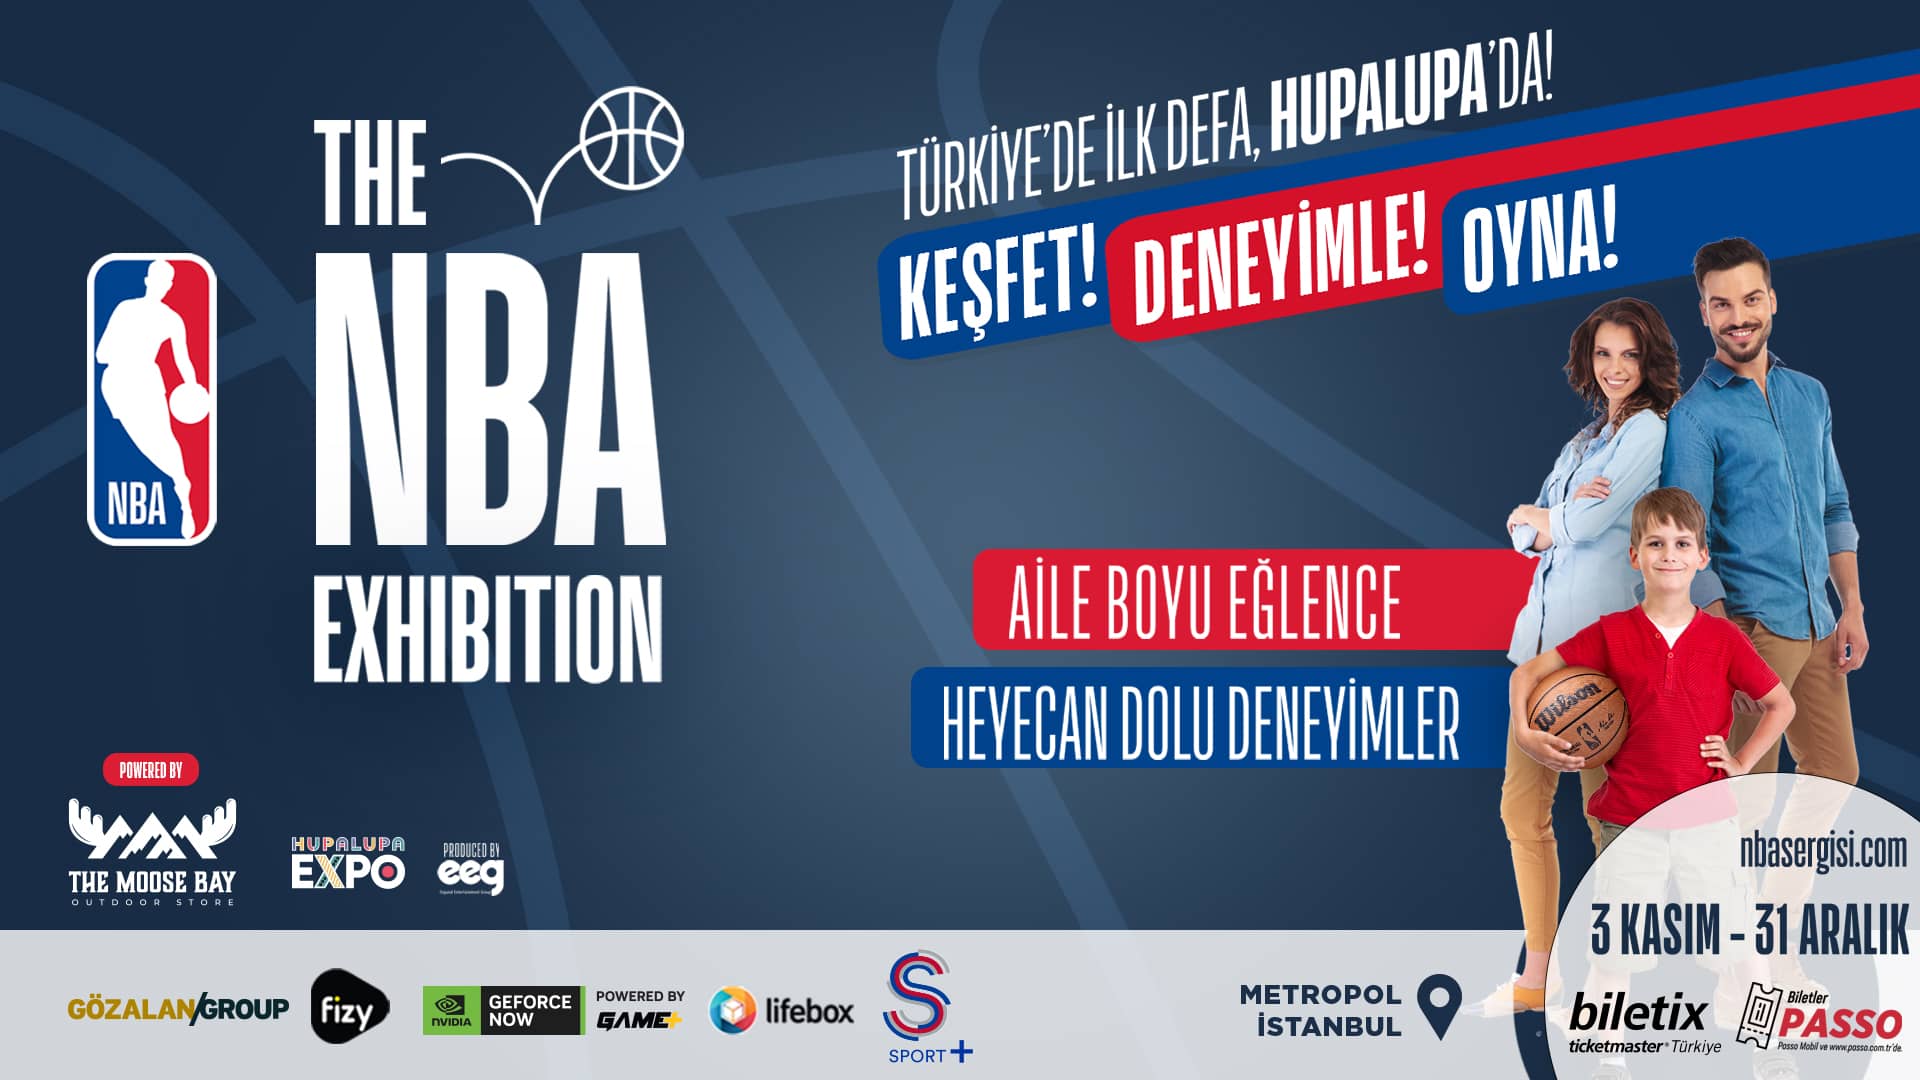 THE NBA EXHIBITION Metropol İstanbul HUPALUPA’DA!